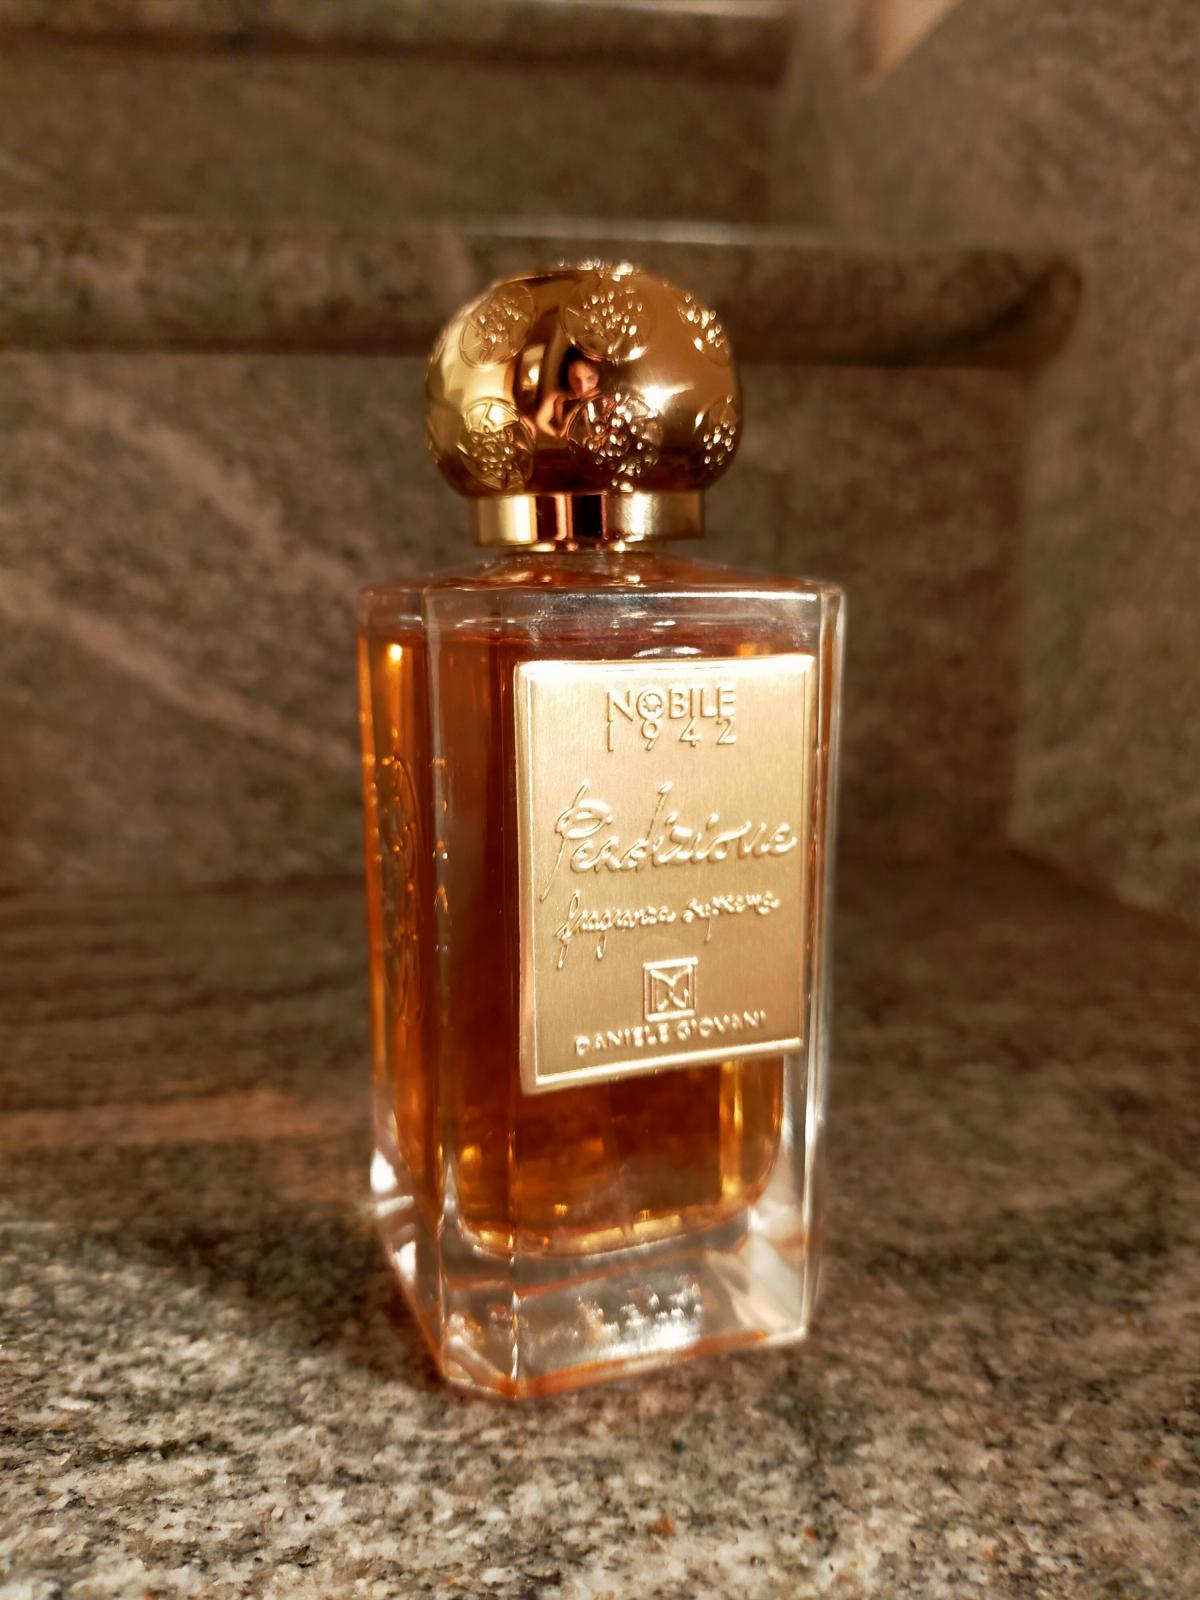 Perdizione Nobile 1942 perfume - a fragrance for women and men 2016